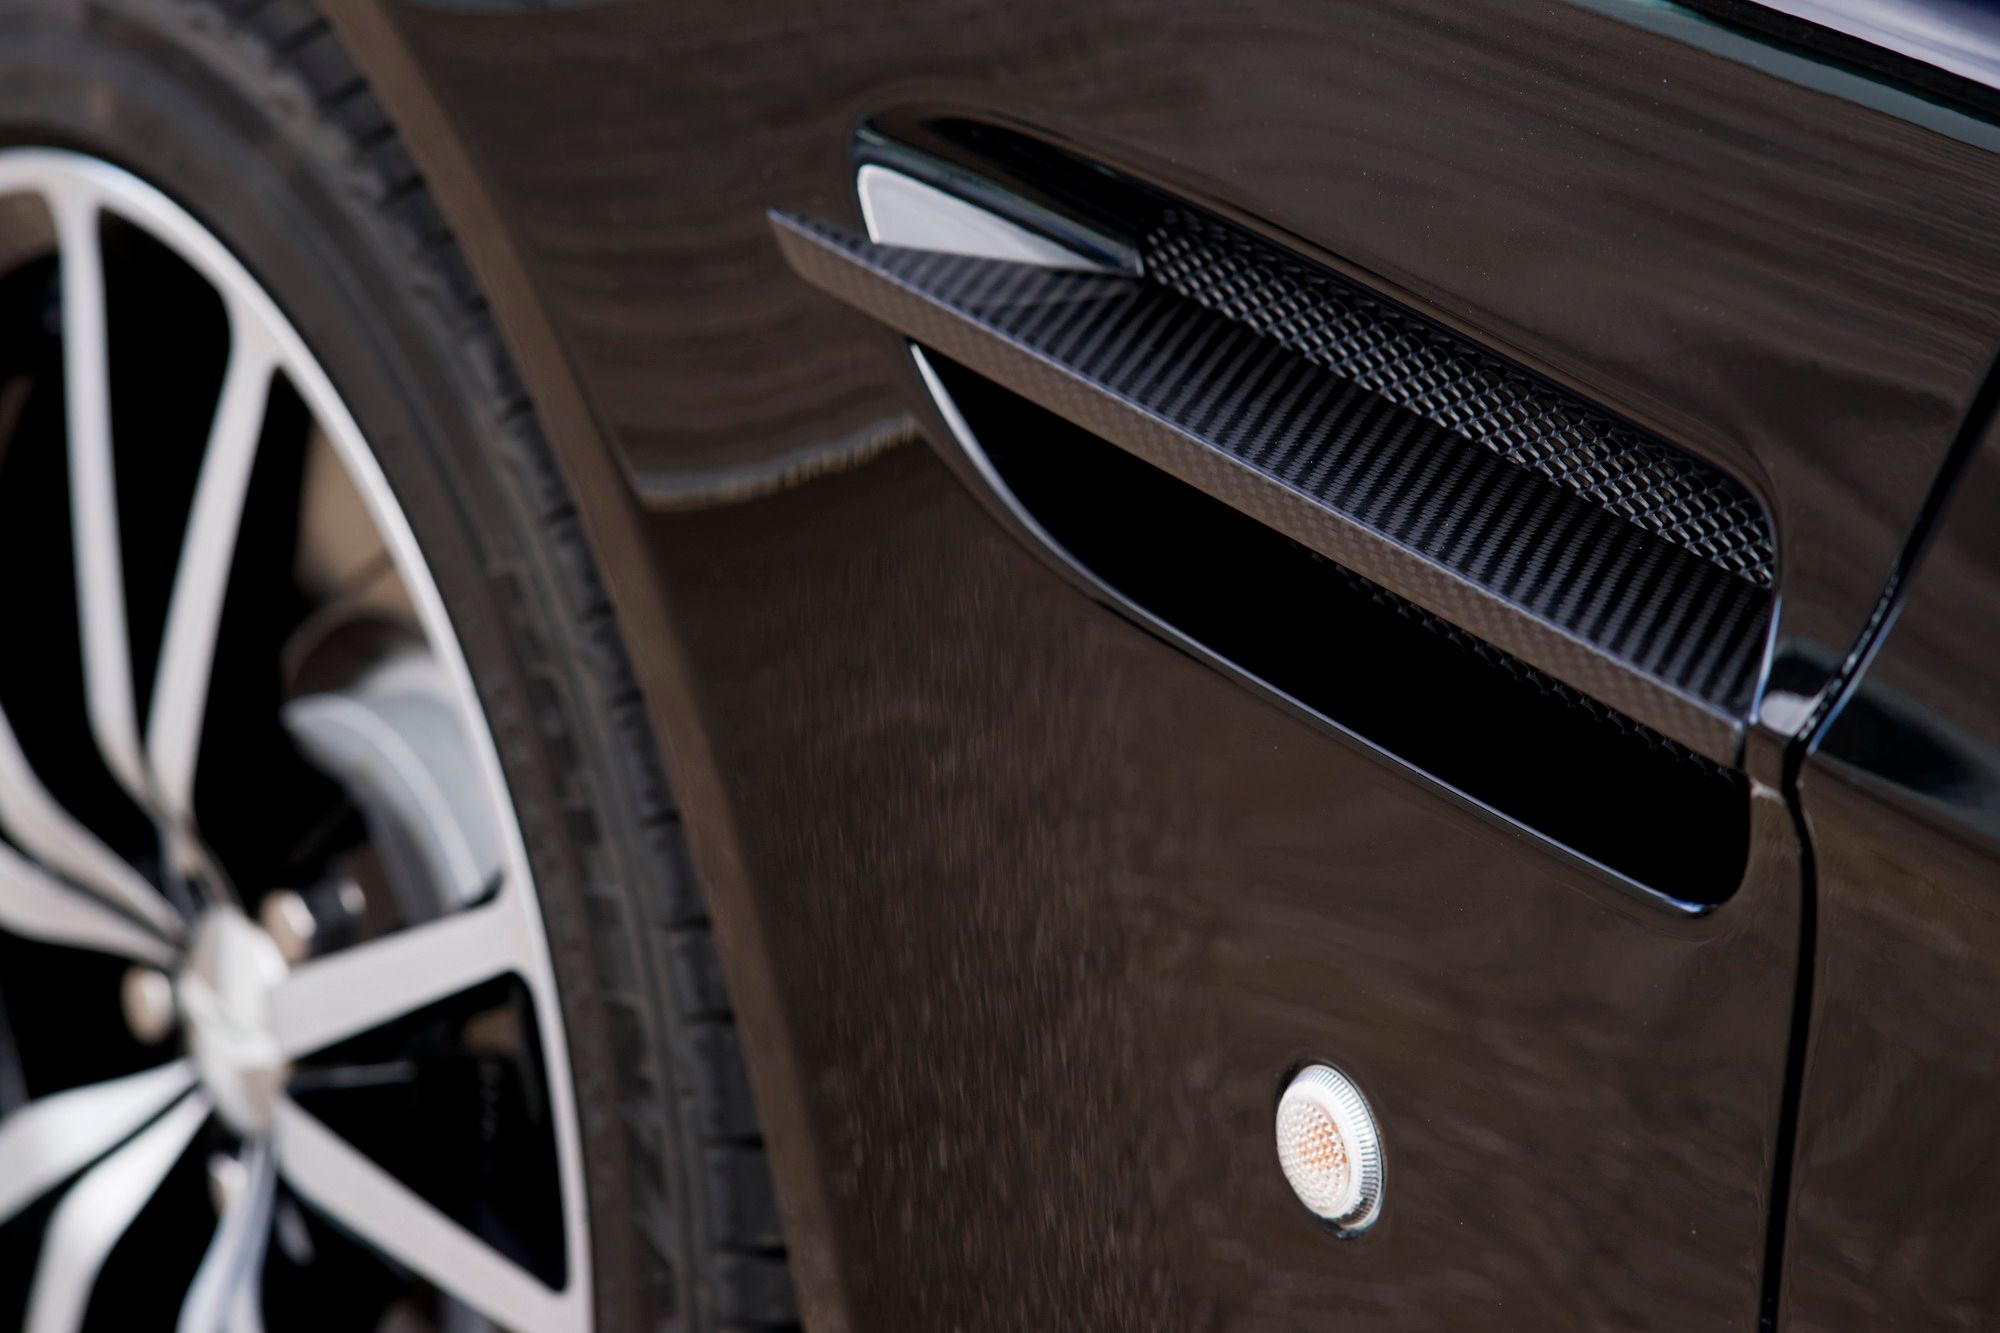 2011 Aston Martin V8 Vantage N420 Roadster